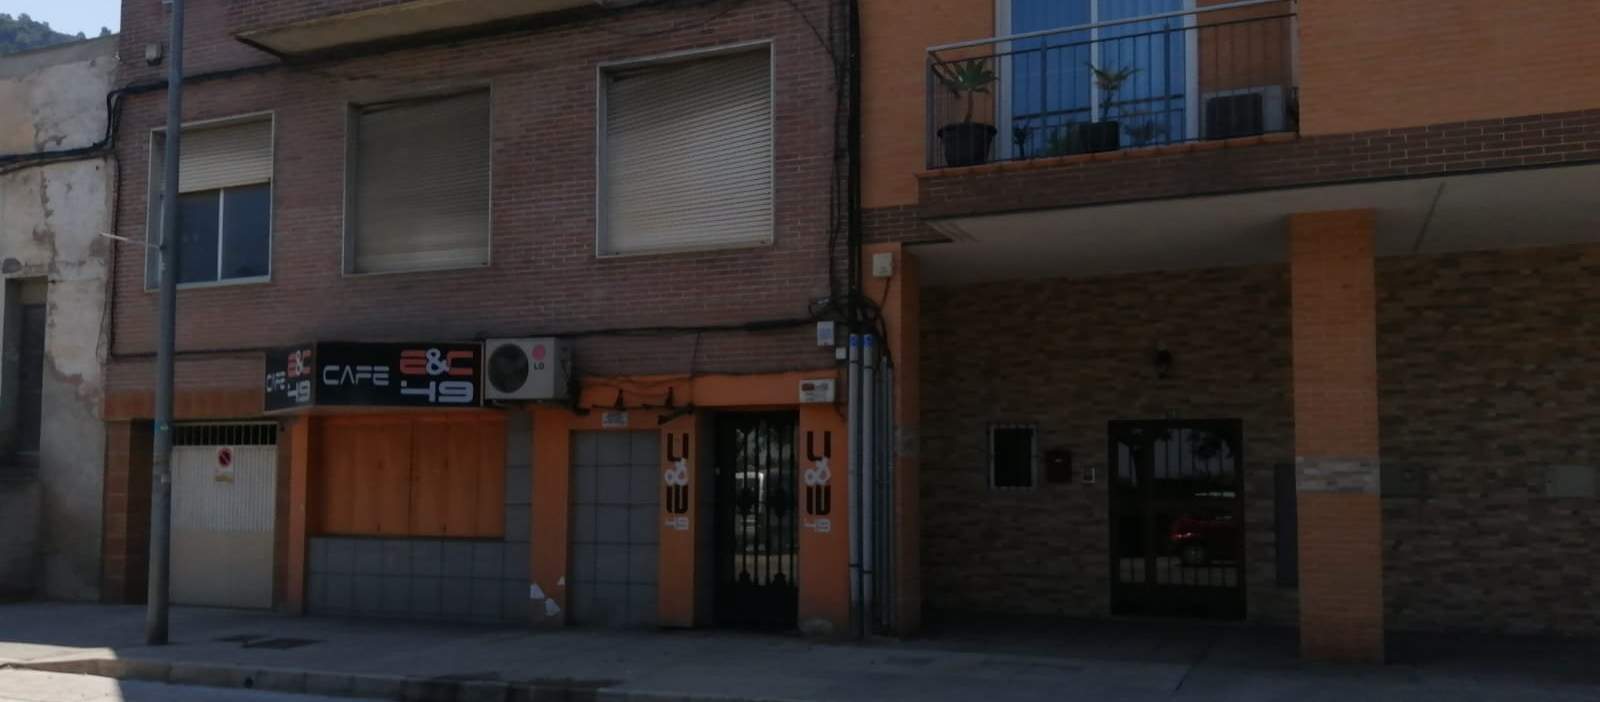 Compra local comercial por 39500 con 54m en condiciones de restauracin en calle pintor velazquez Murcia